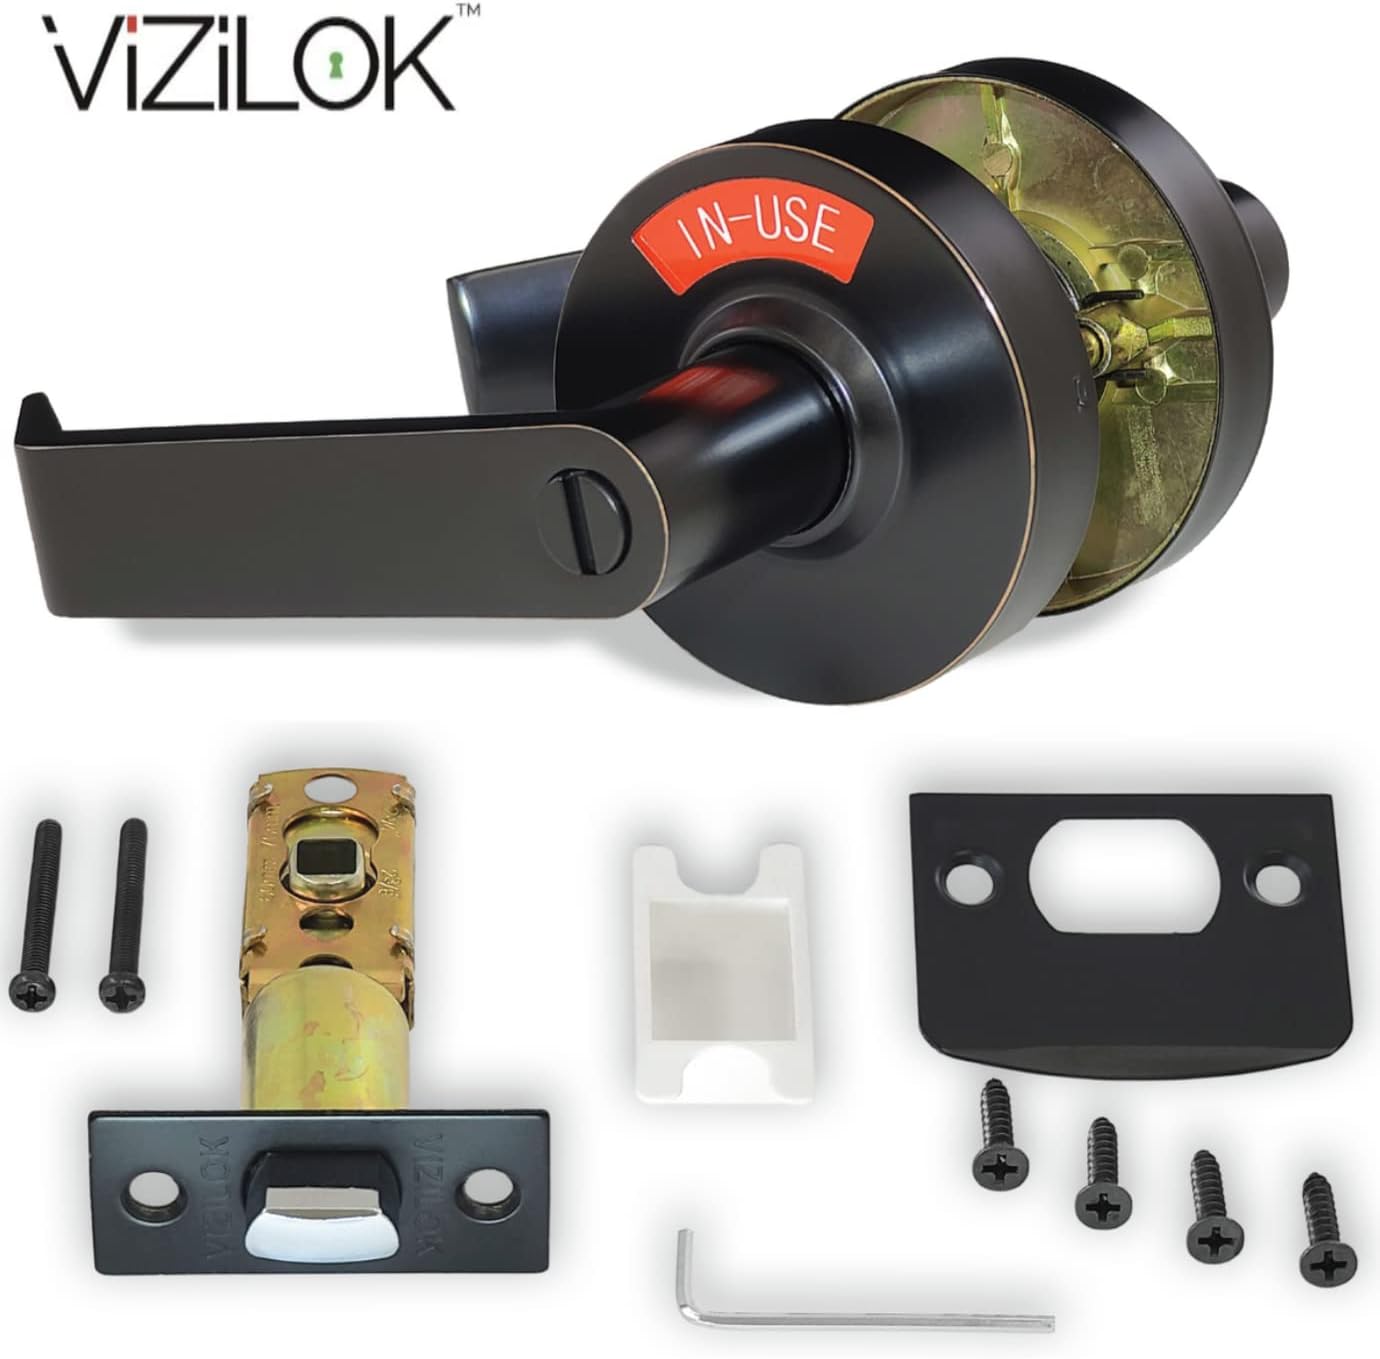 Vizilok Indicator Lock - Perfect for Busy Public Spaces & Businesses –  VIZILOK